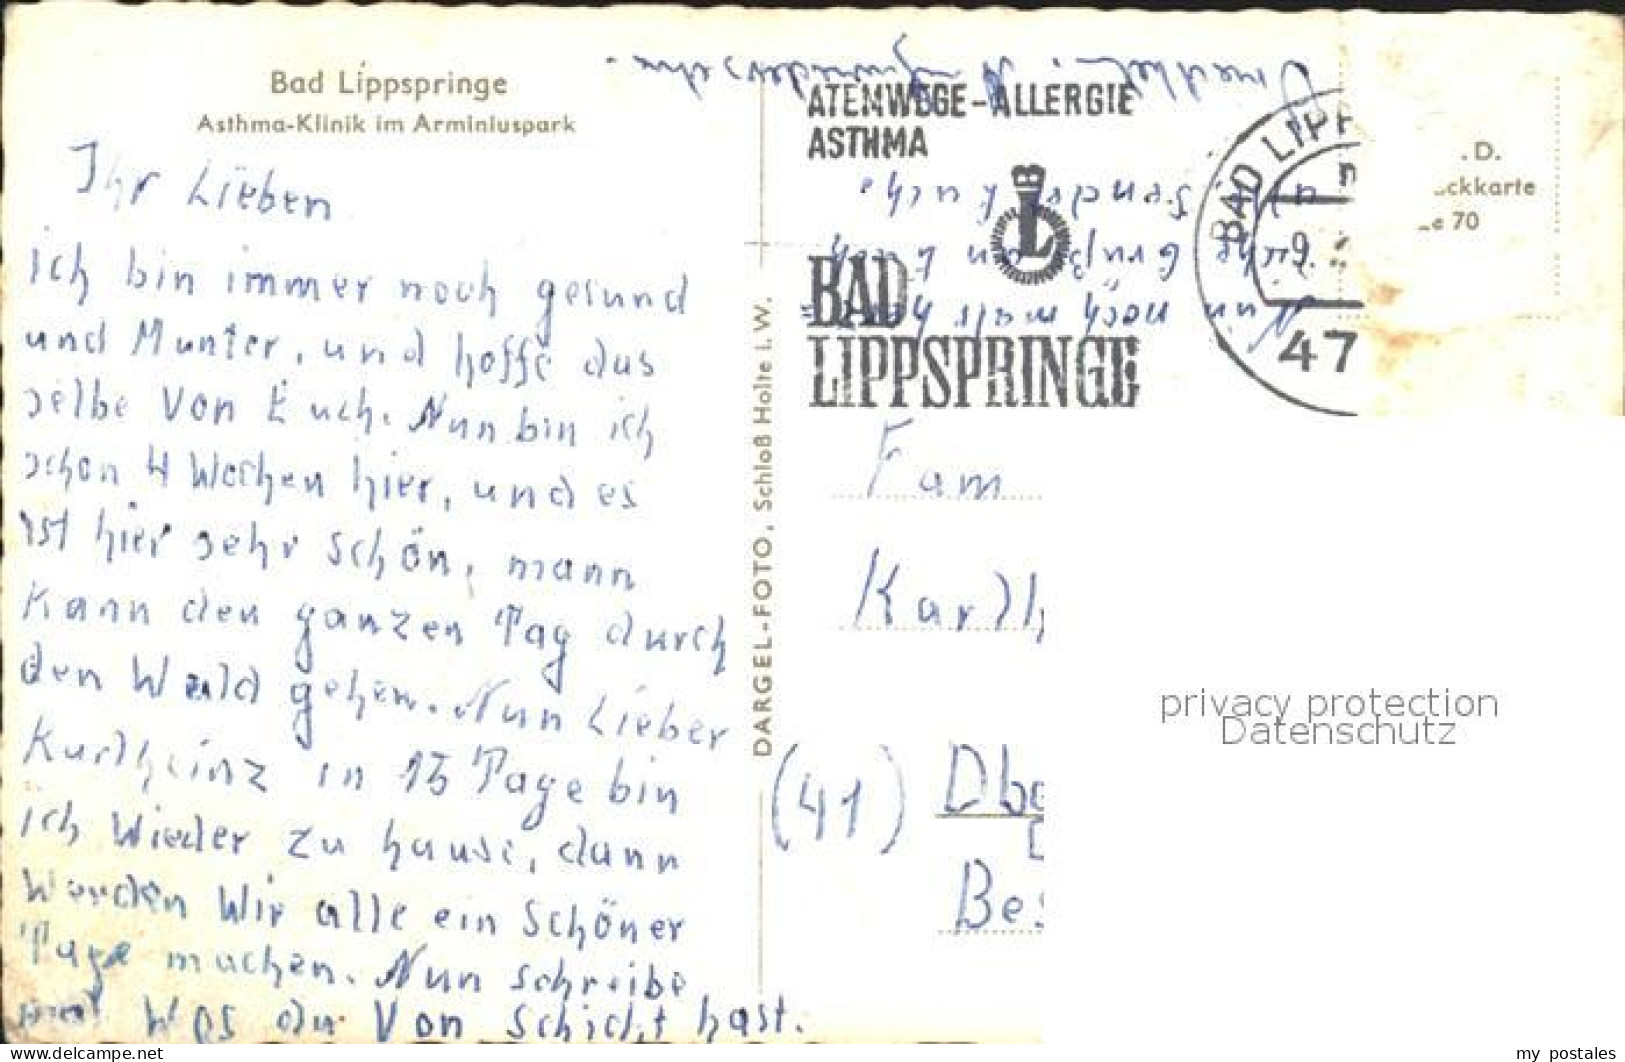 72200318 Bad Lippspringe Astma-Klinik Bad Lippspringe - Bad Lippspringe